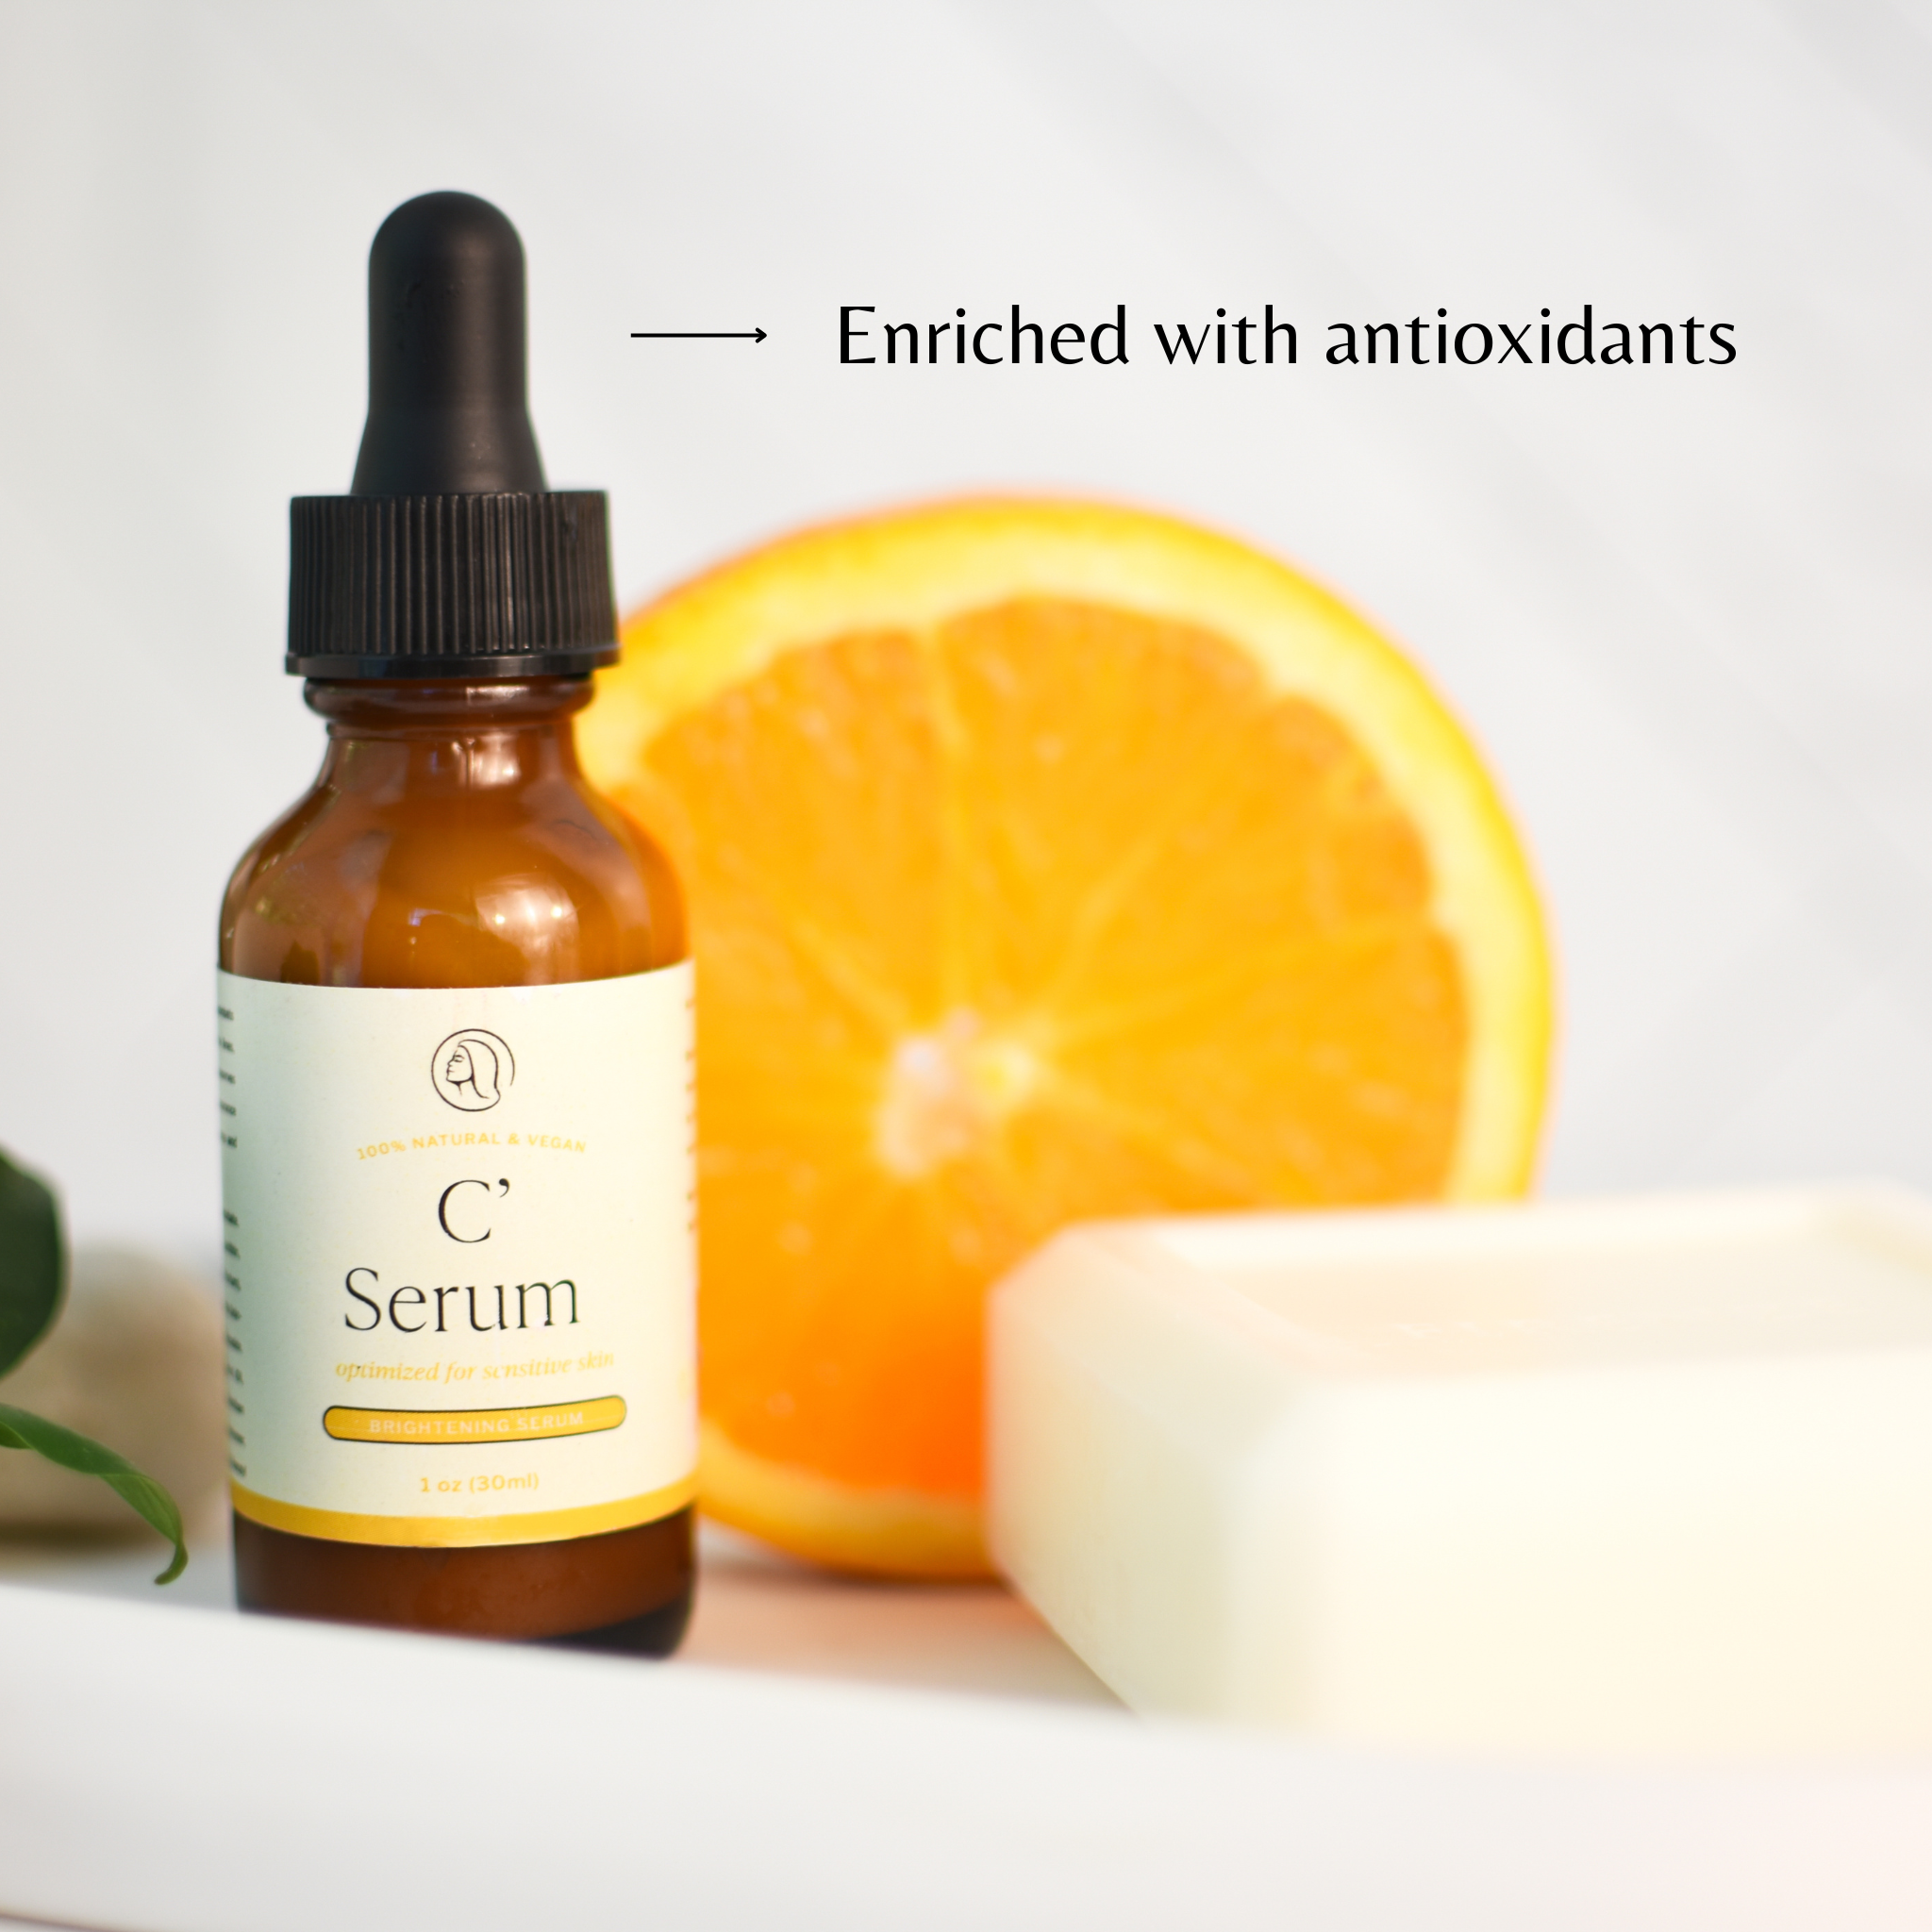 Vitamin C Serum - enriched with antioxidants